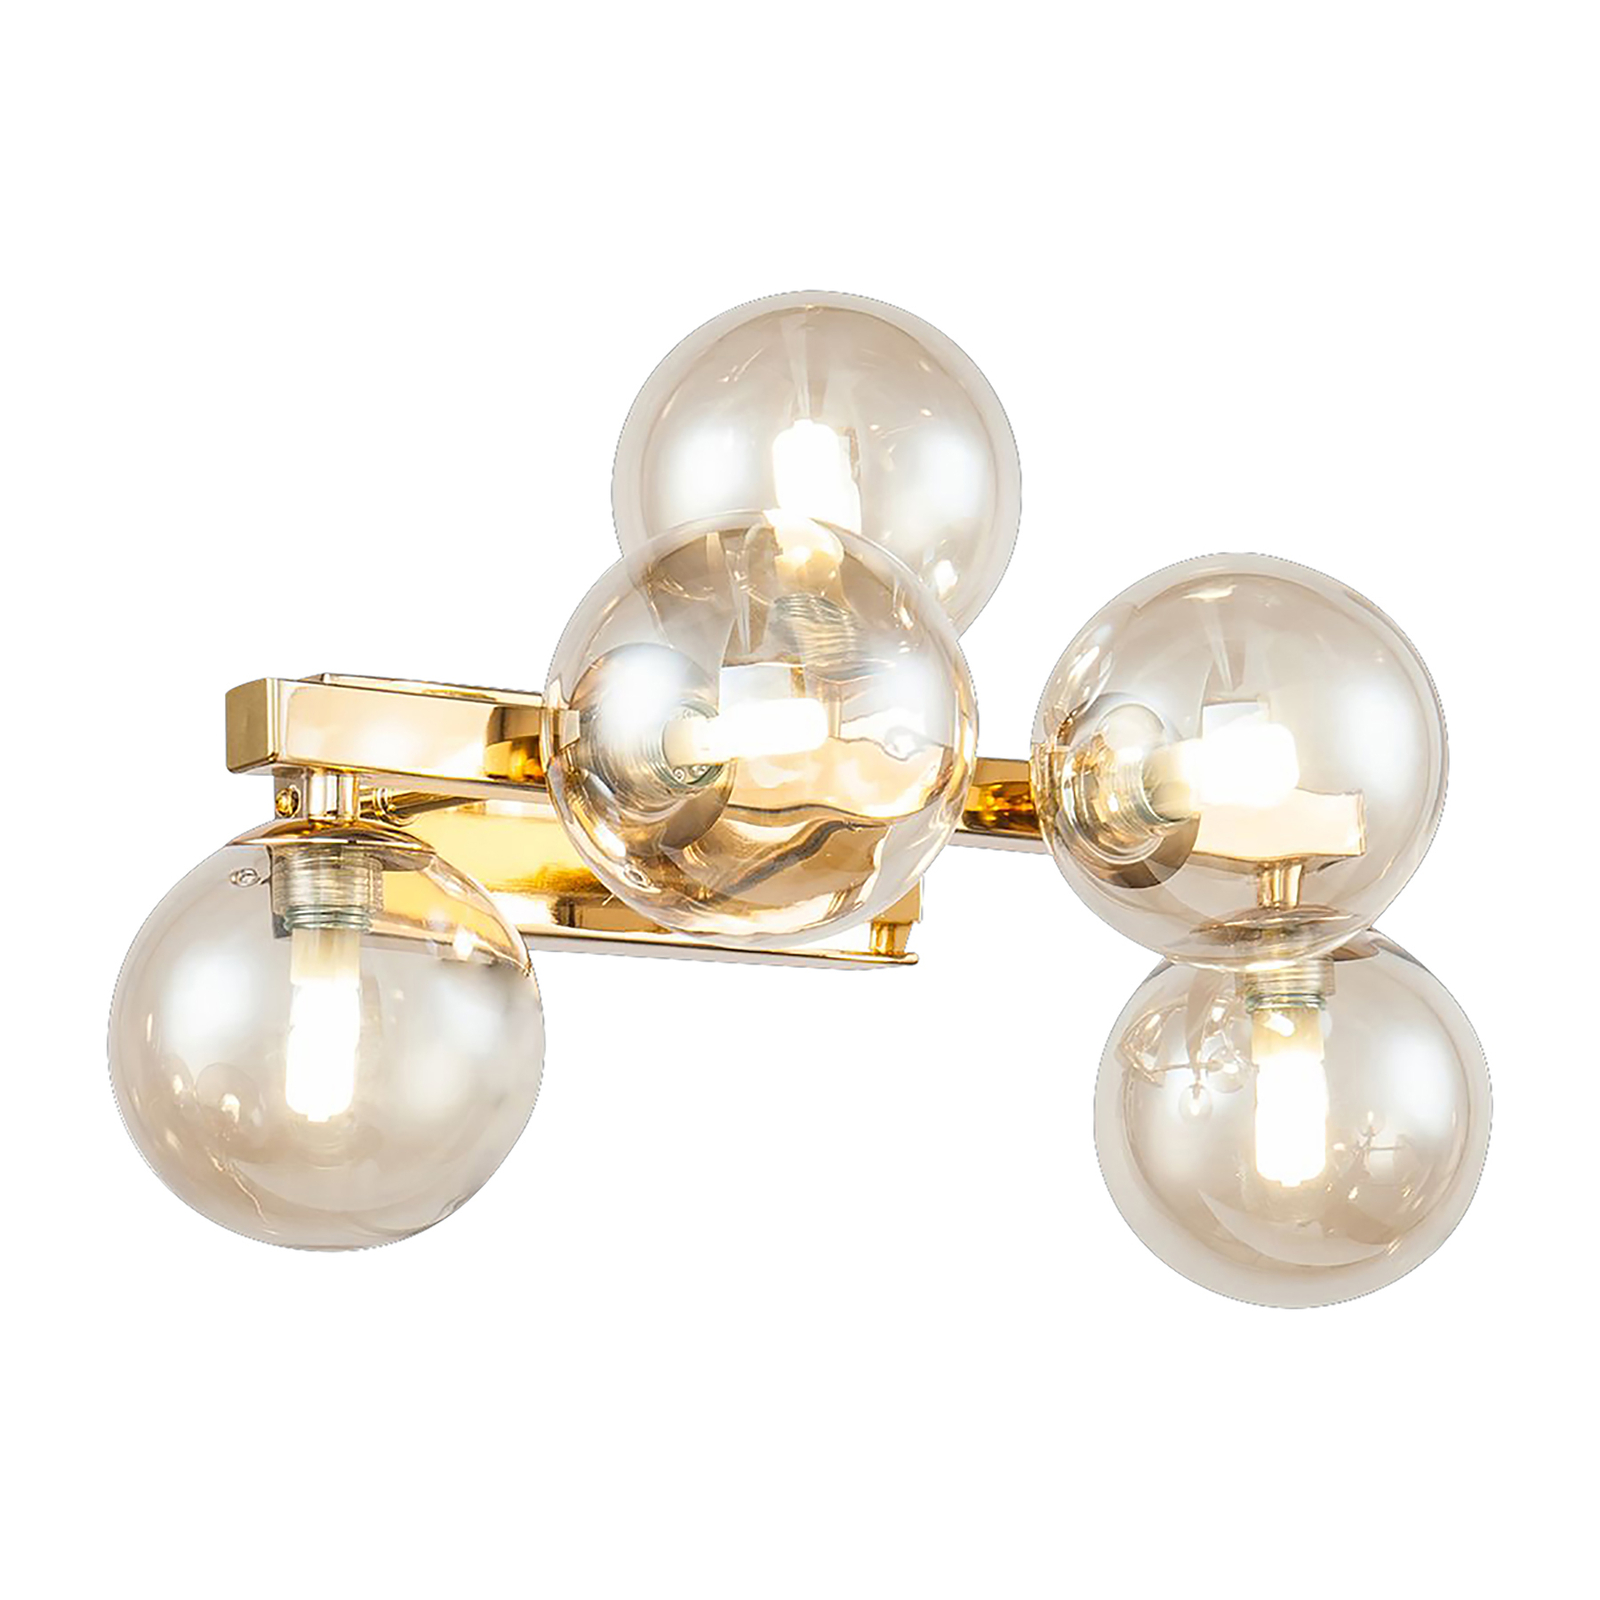 Maytoni Dallas wandlamp met 5 glasbollen, goud